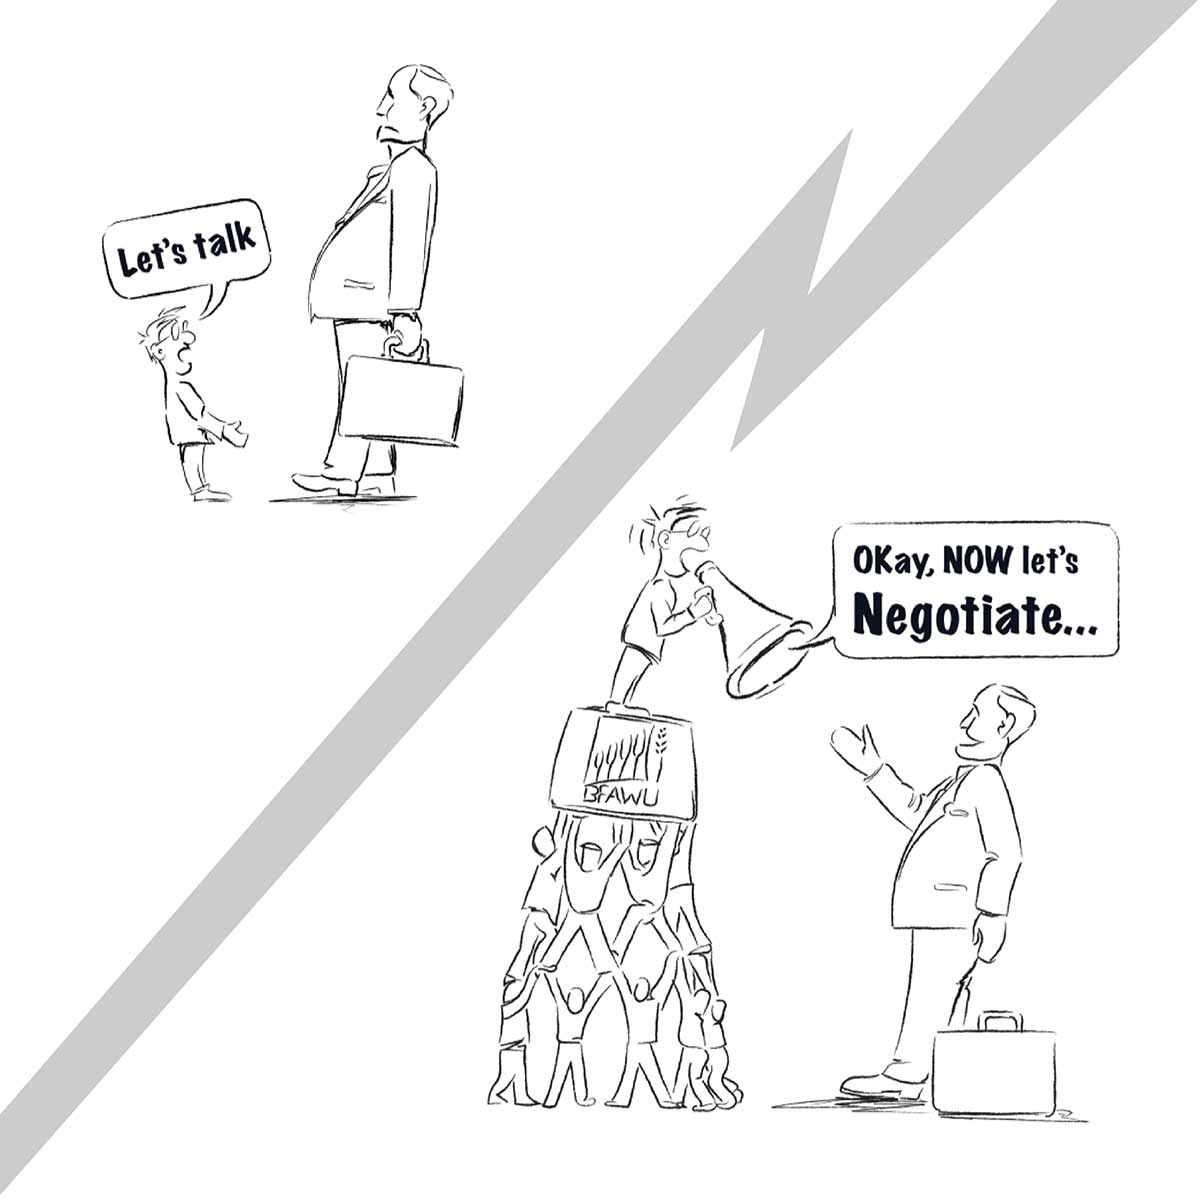 illustration to communicate business practice. Cartoon